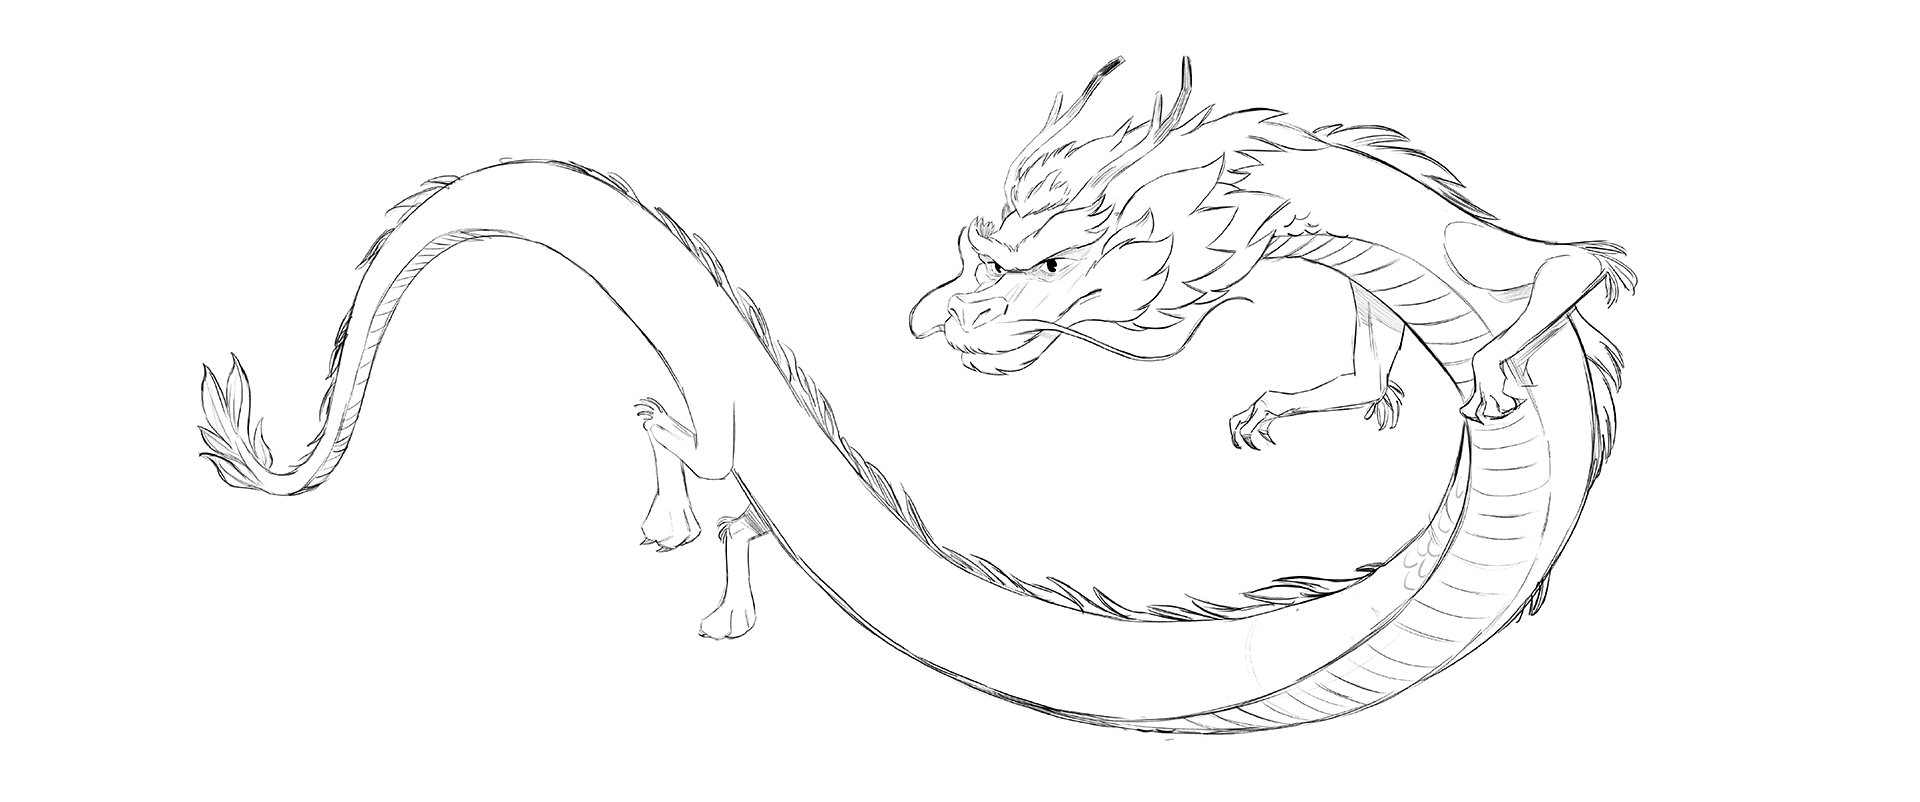 diptyque pekin parallel studio animation dragon